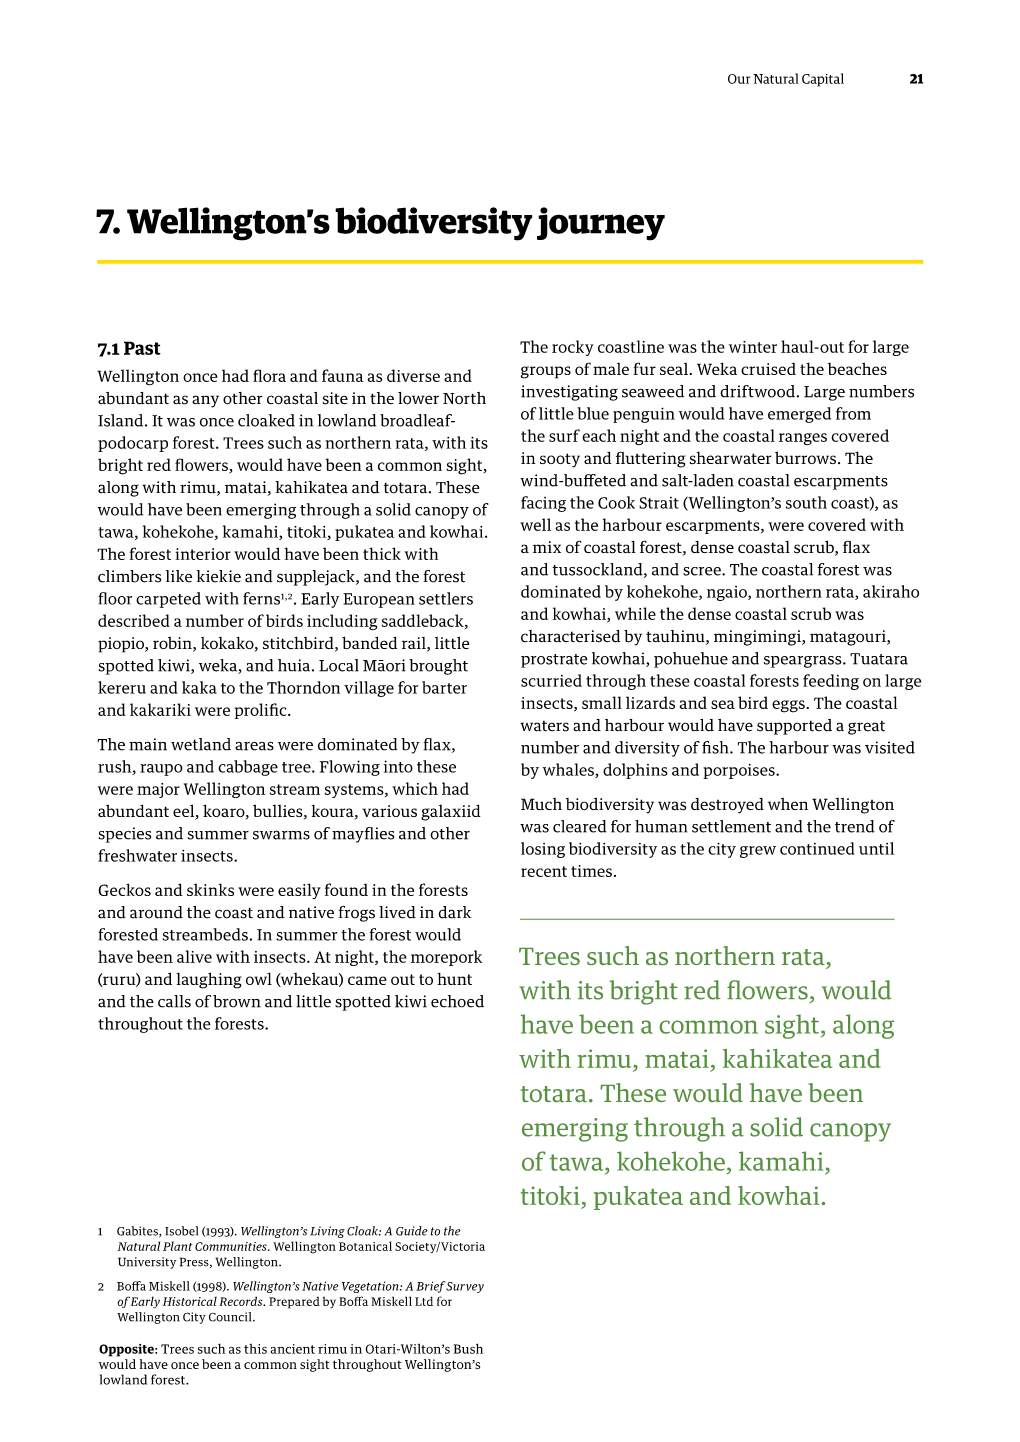 Our Natural Capital – Wellington's Biodiversity Journey